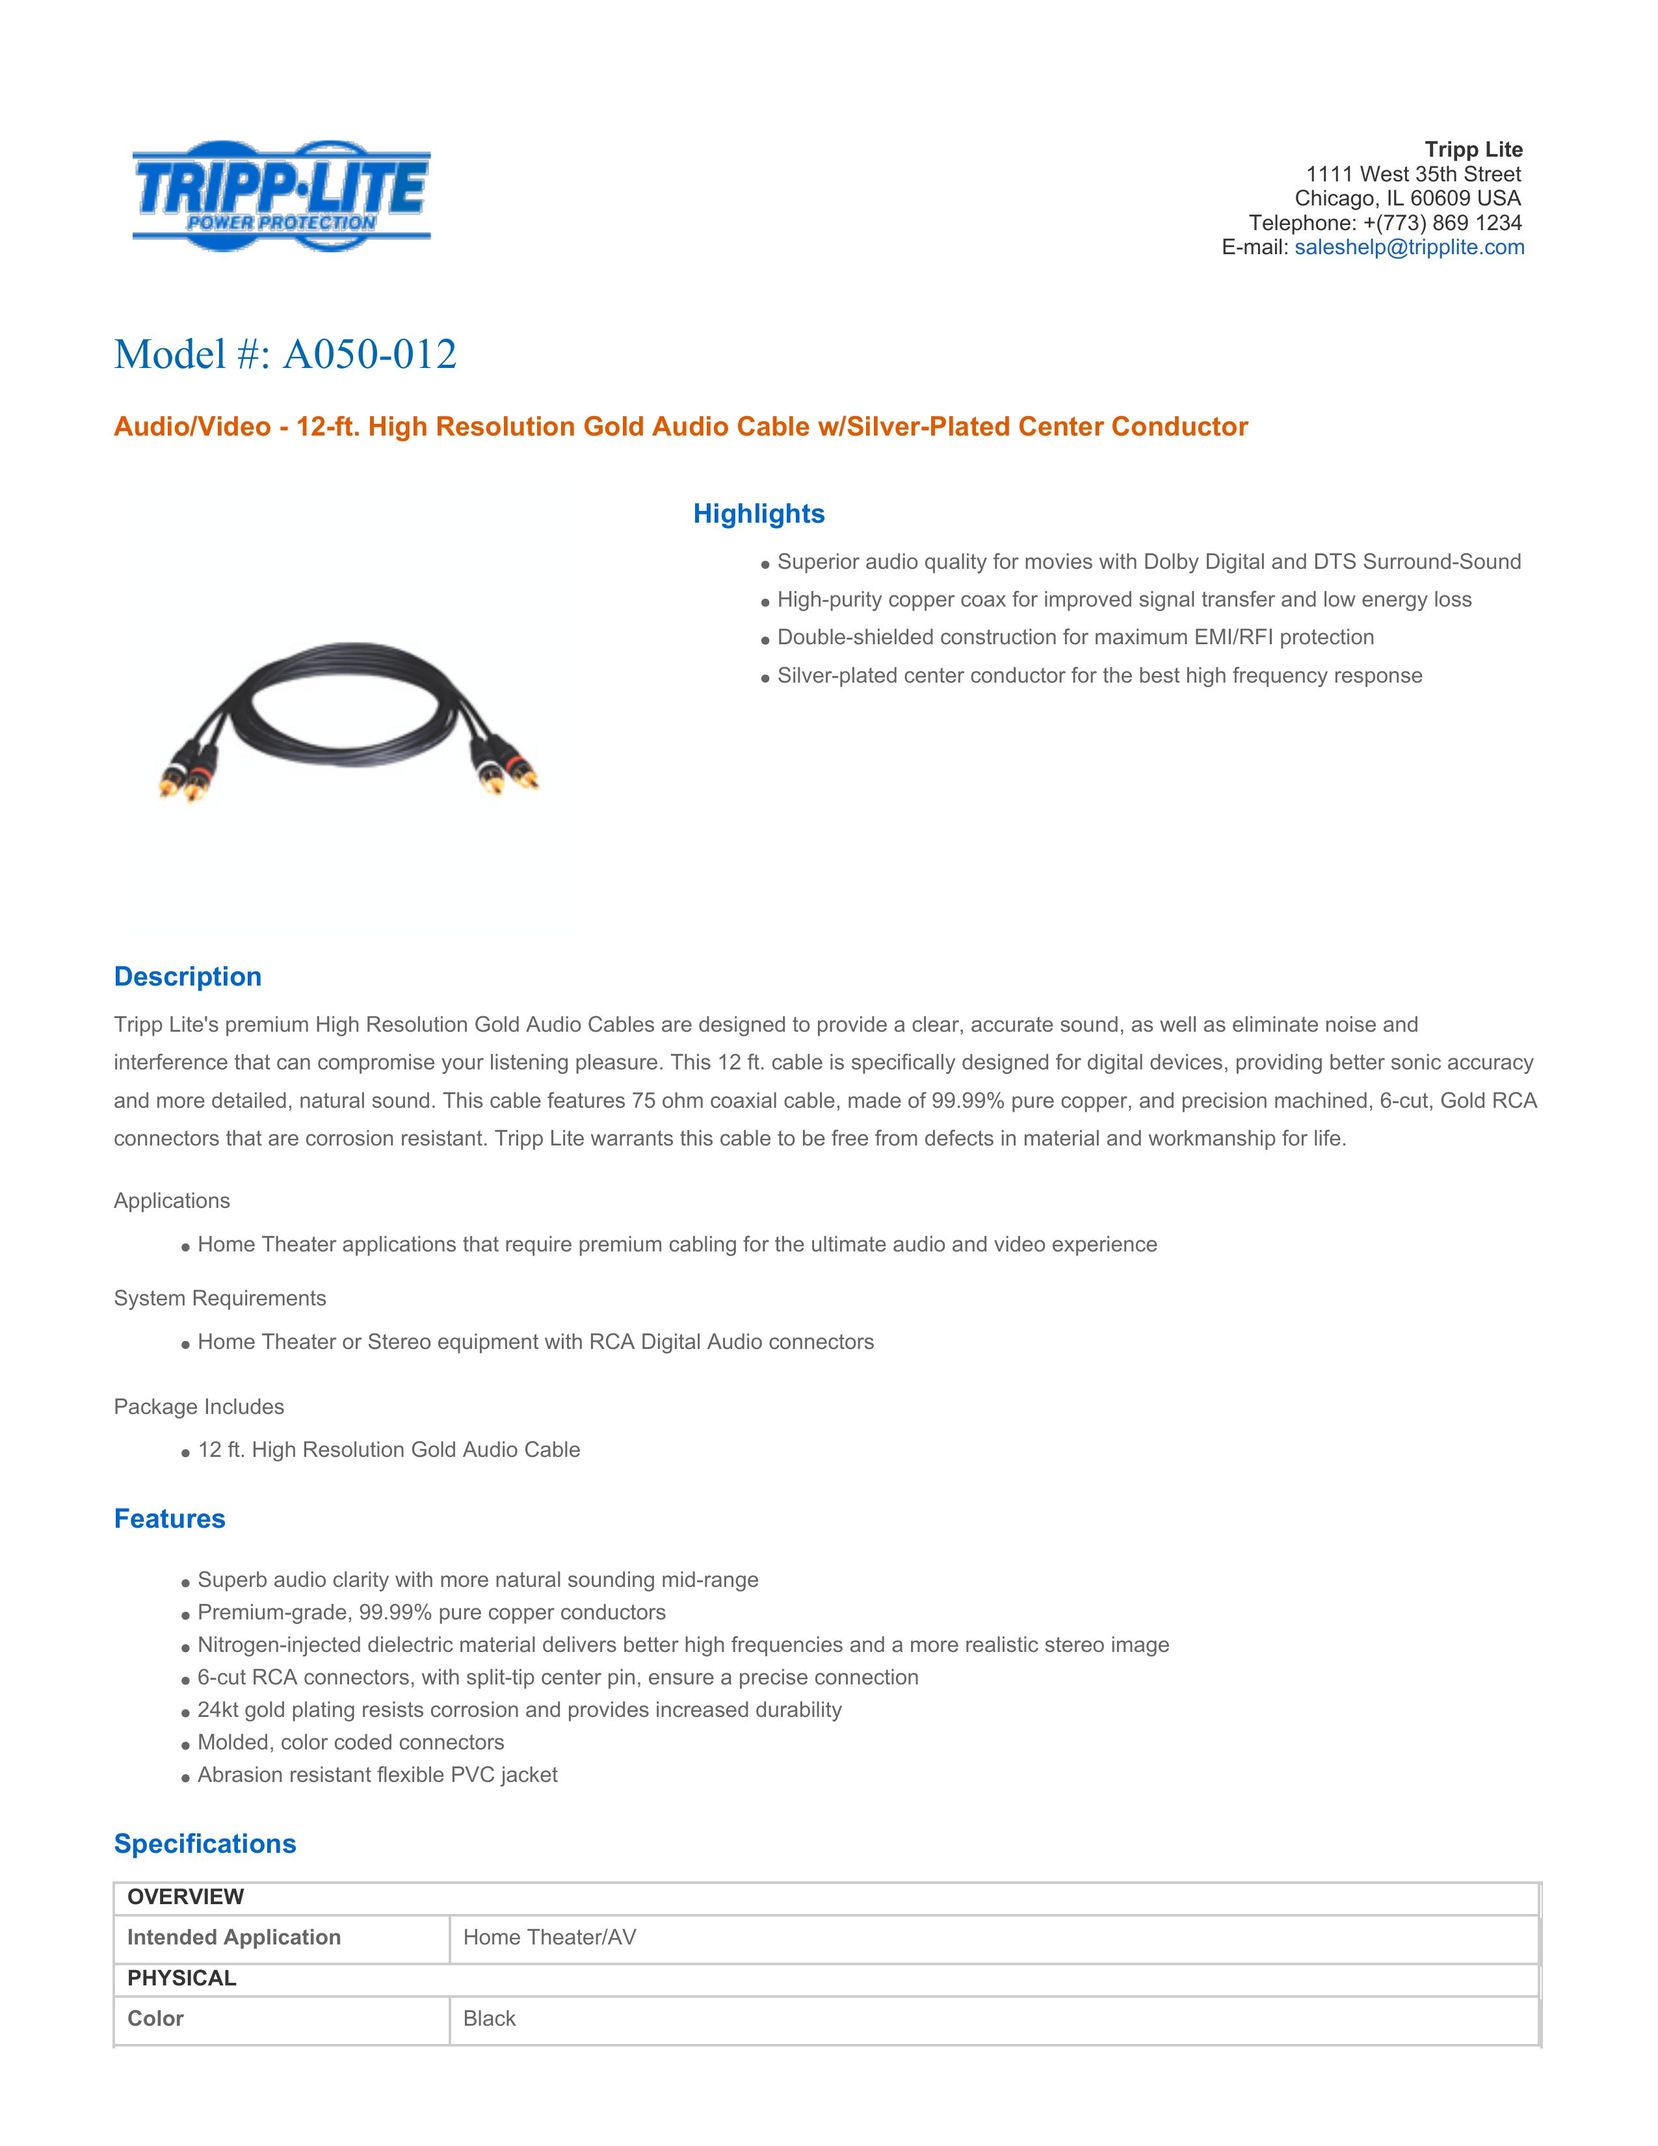 Tripp Lite A050-012 TV Cables User Manual